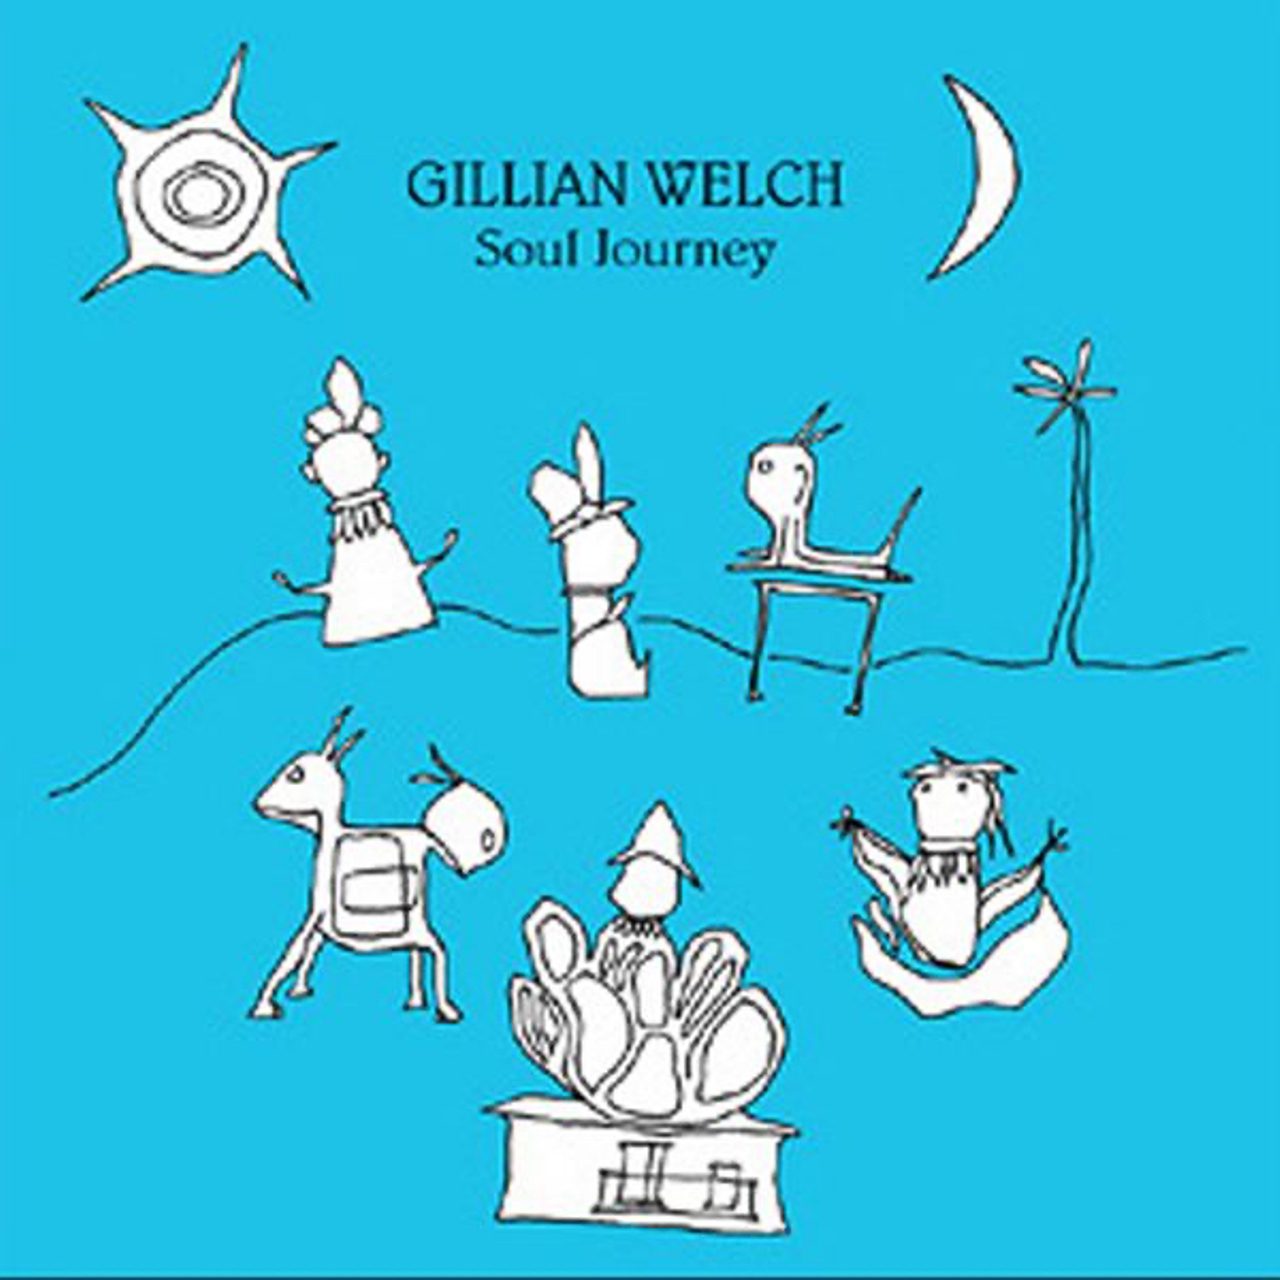 Gillian Welch - Soul Journey cover album